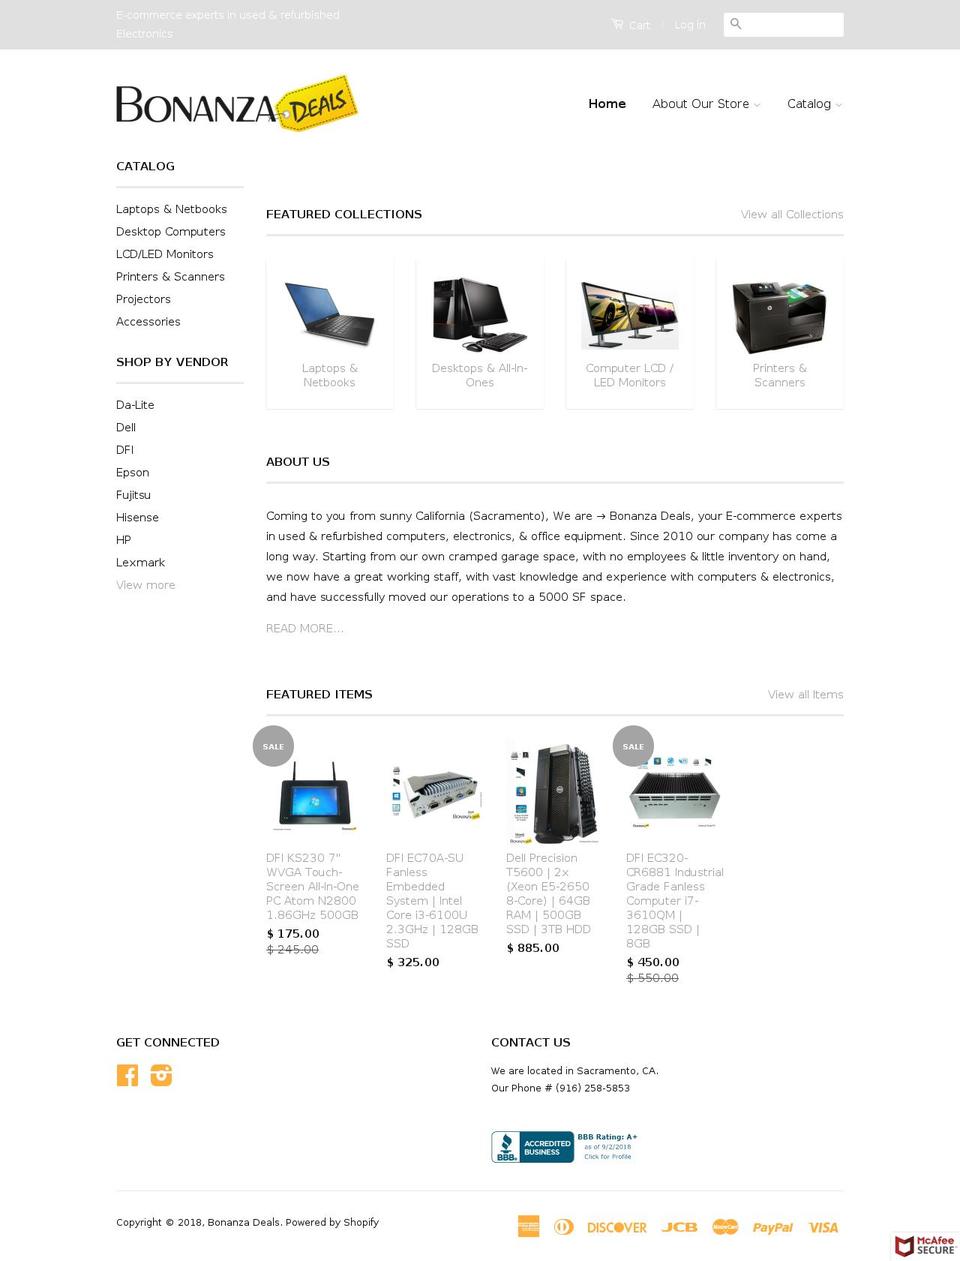 bonanza.deals shopify website screenshot